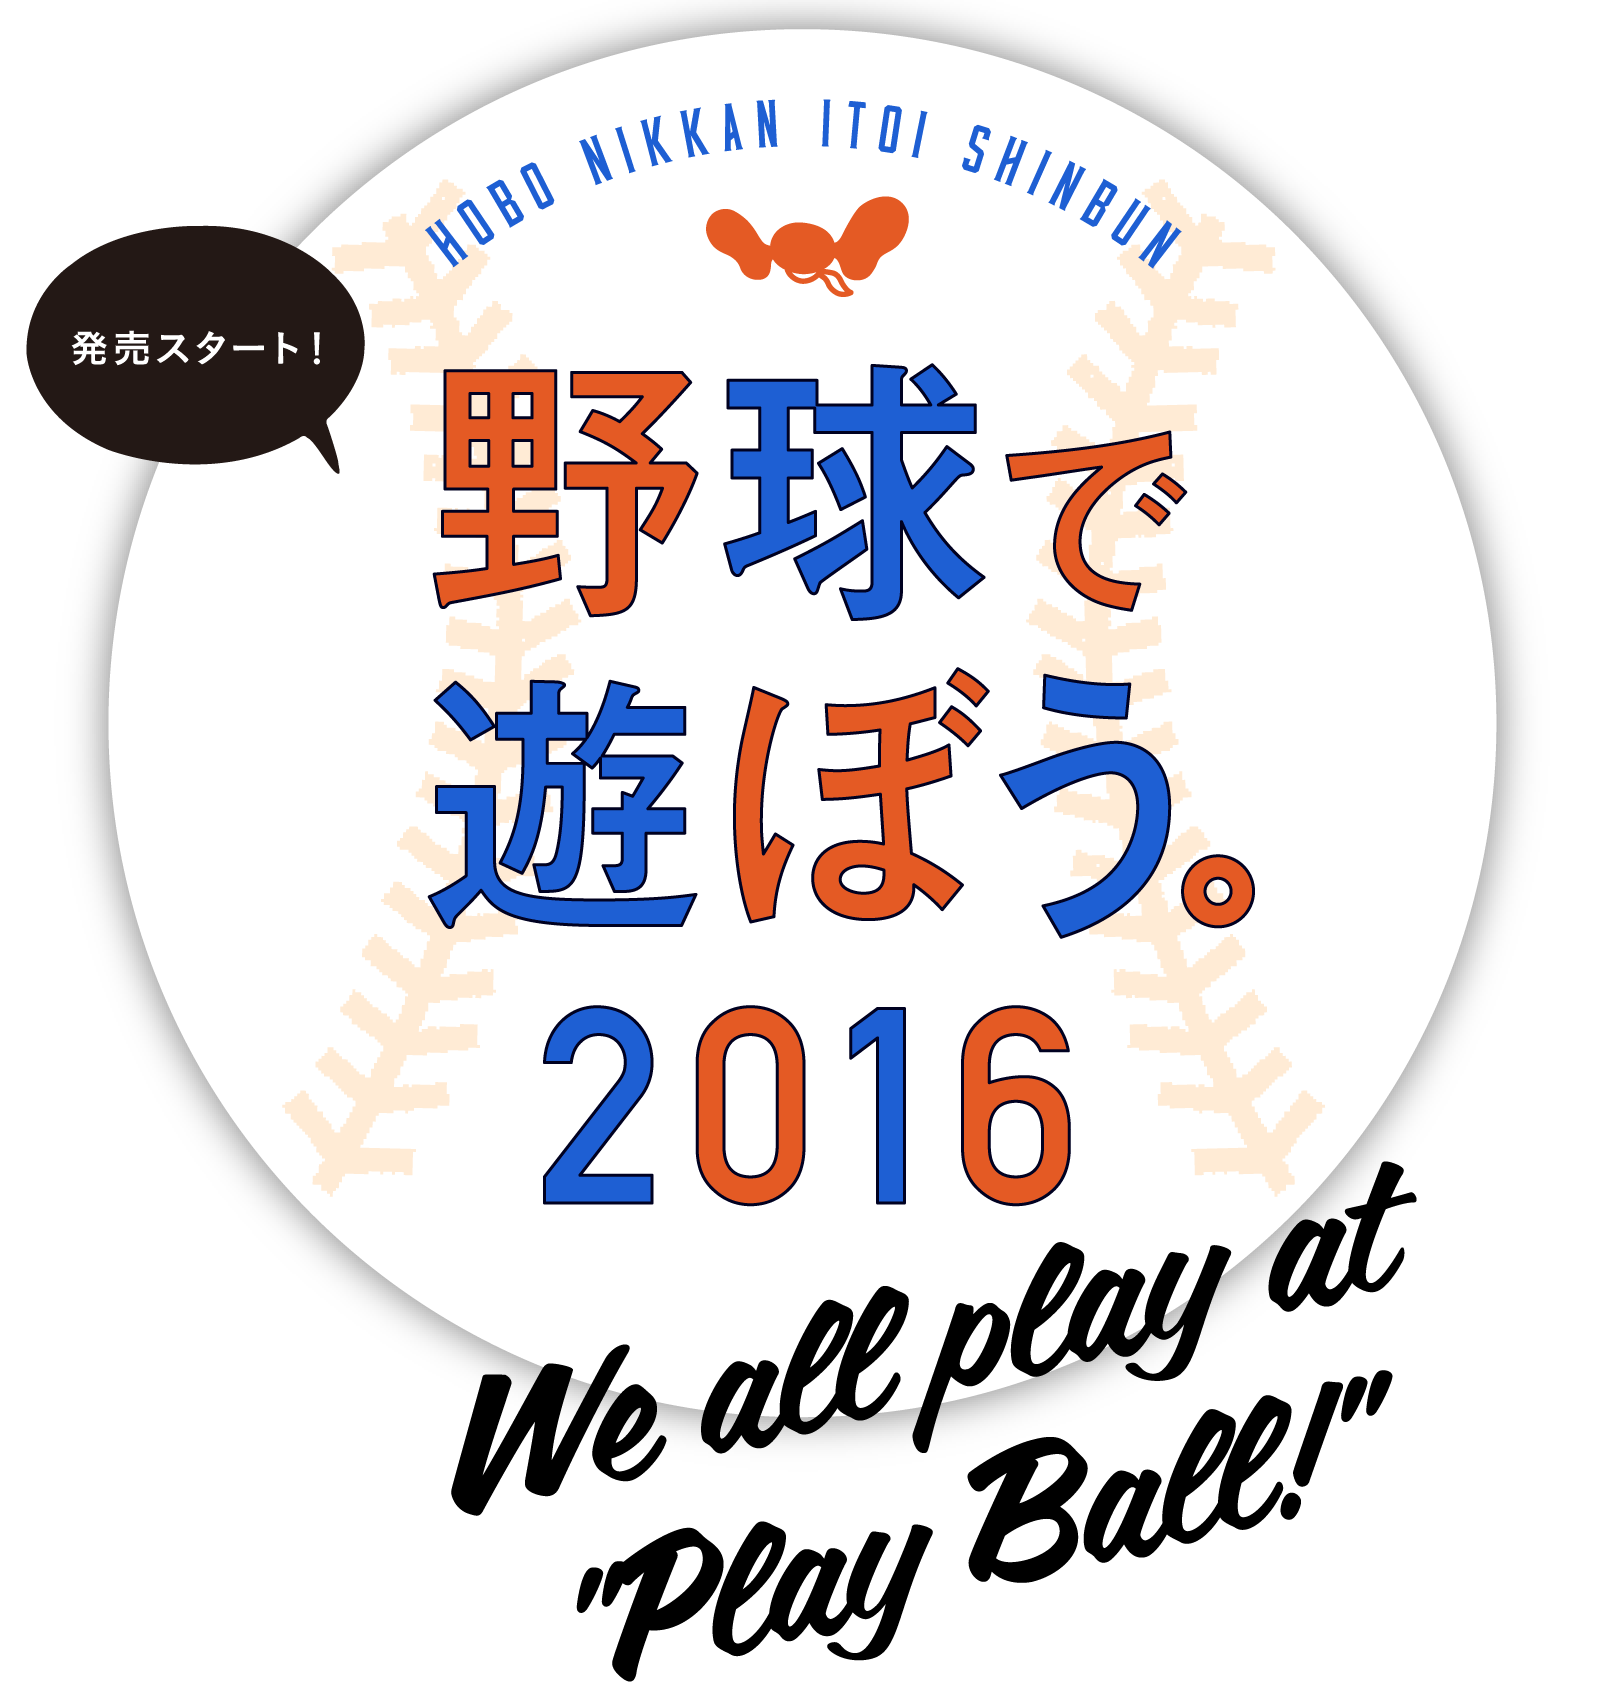 hobo nikkan itoi shinbun 野球で遊ぼう。2016